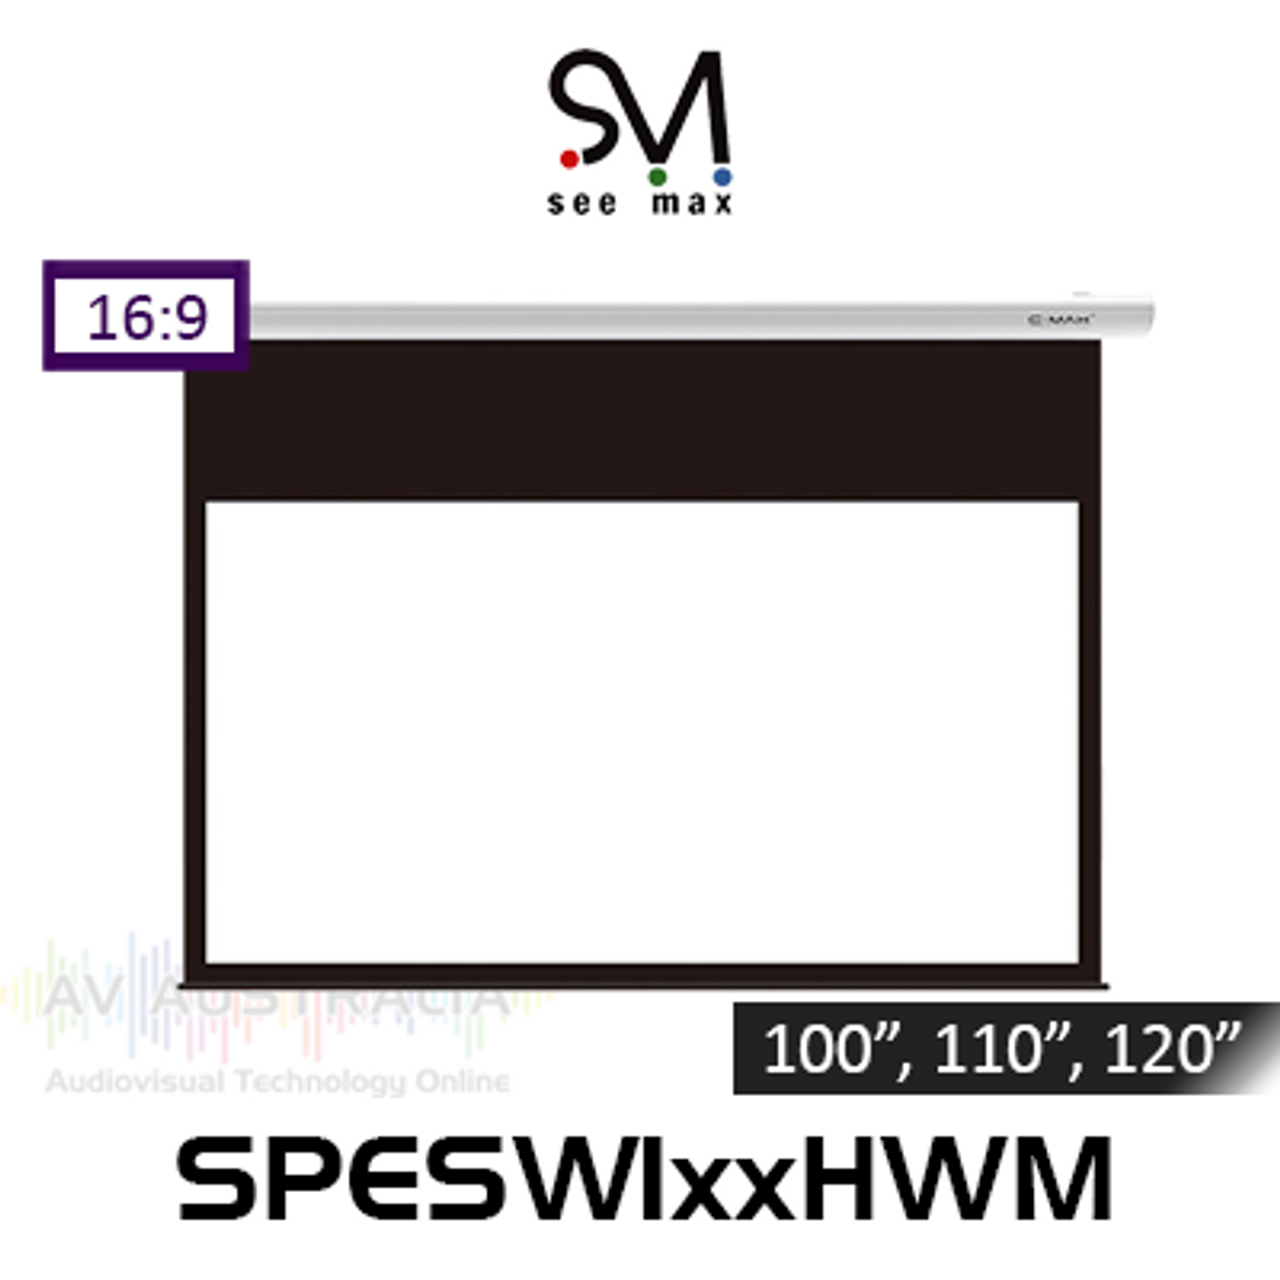 SeeMax Matt White 16:9 Motorised Projection Screens (100", 110", 120")